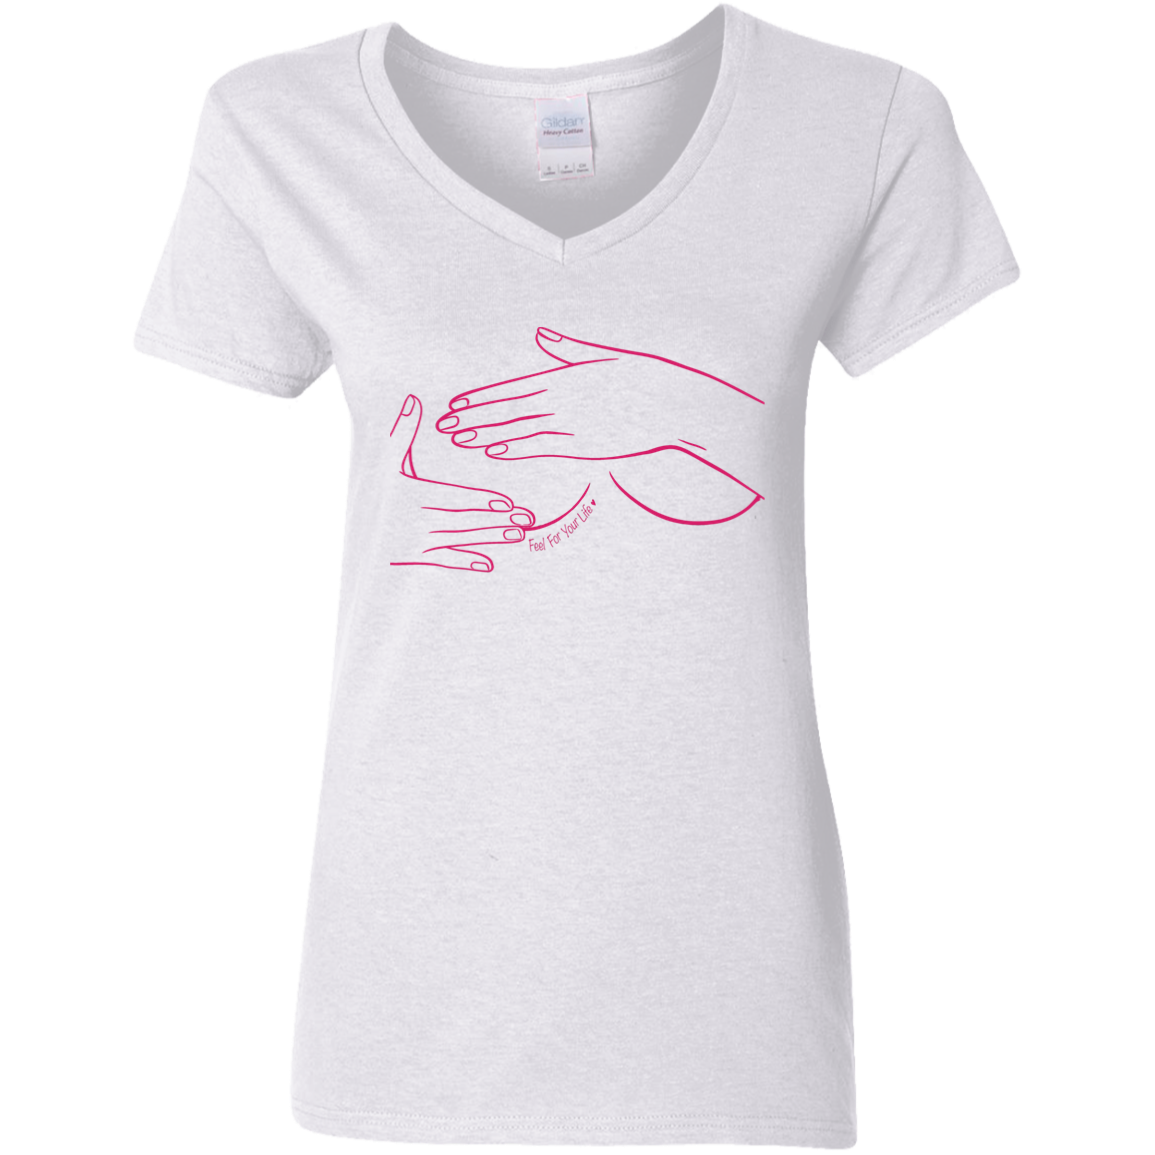 Self Breast Exam Ladies' V-Neck T-Shirt White w/ Pink Emblem